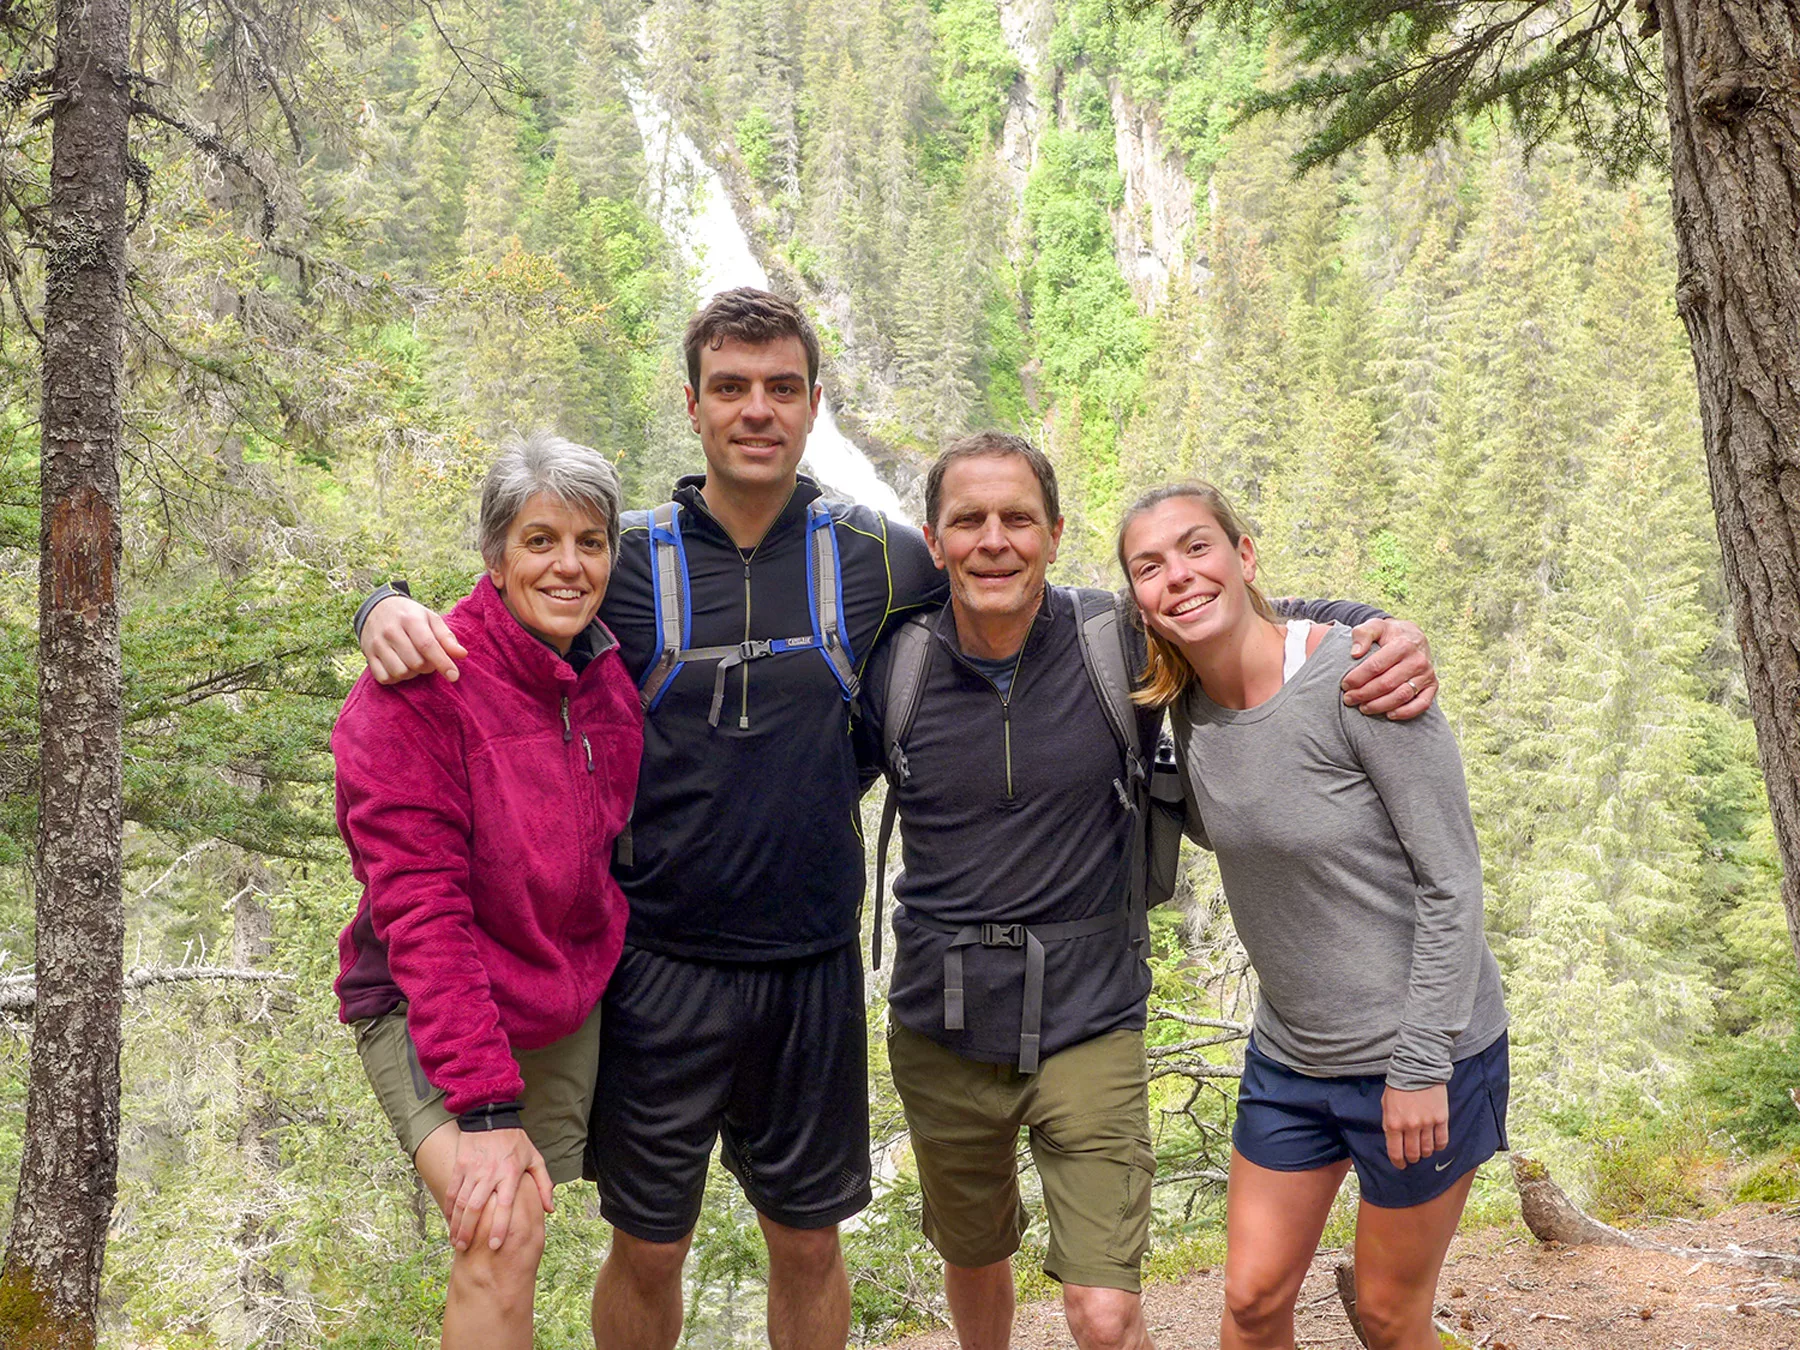 Allen-Hoerning family photo at falls